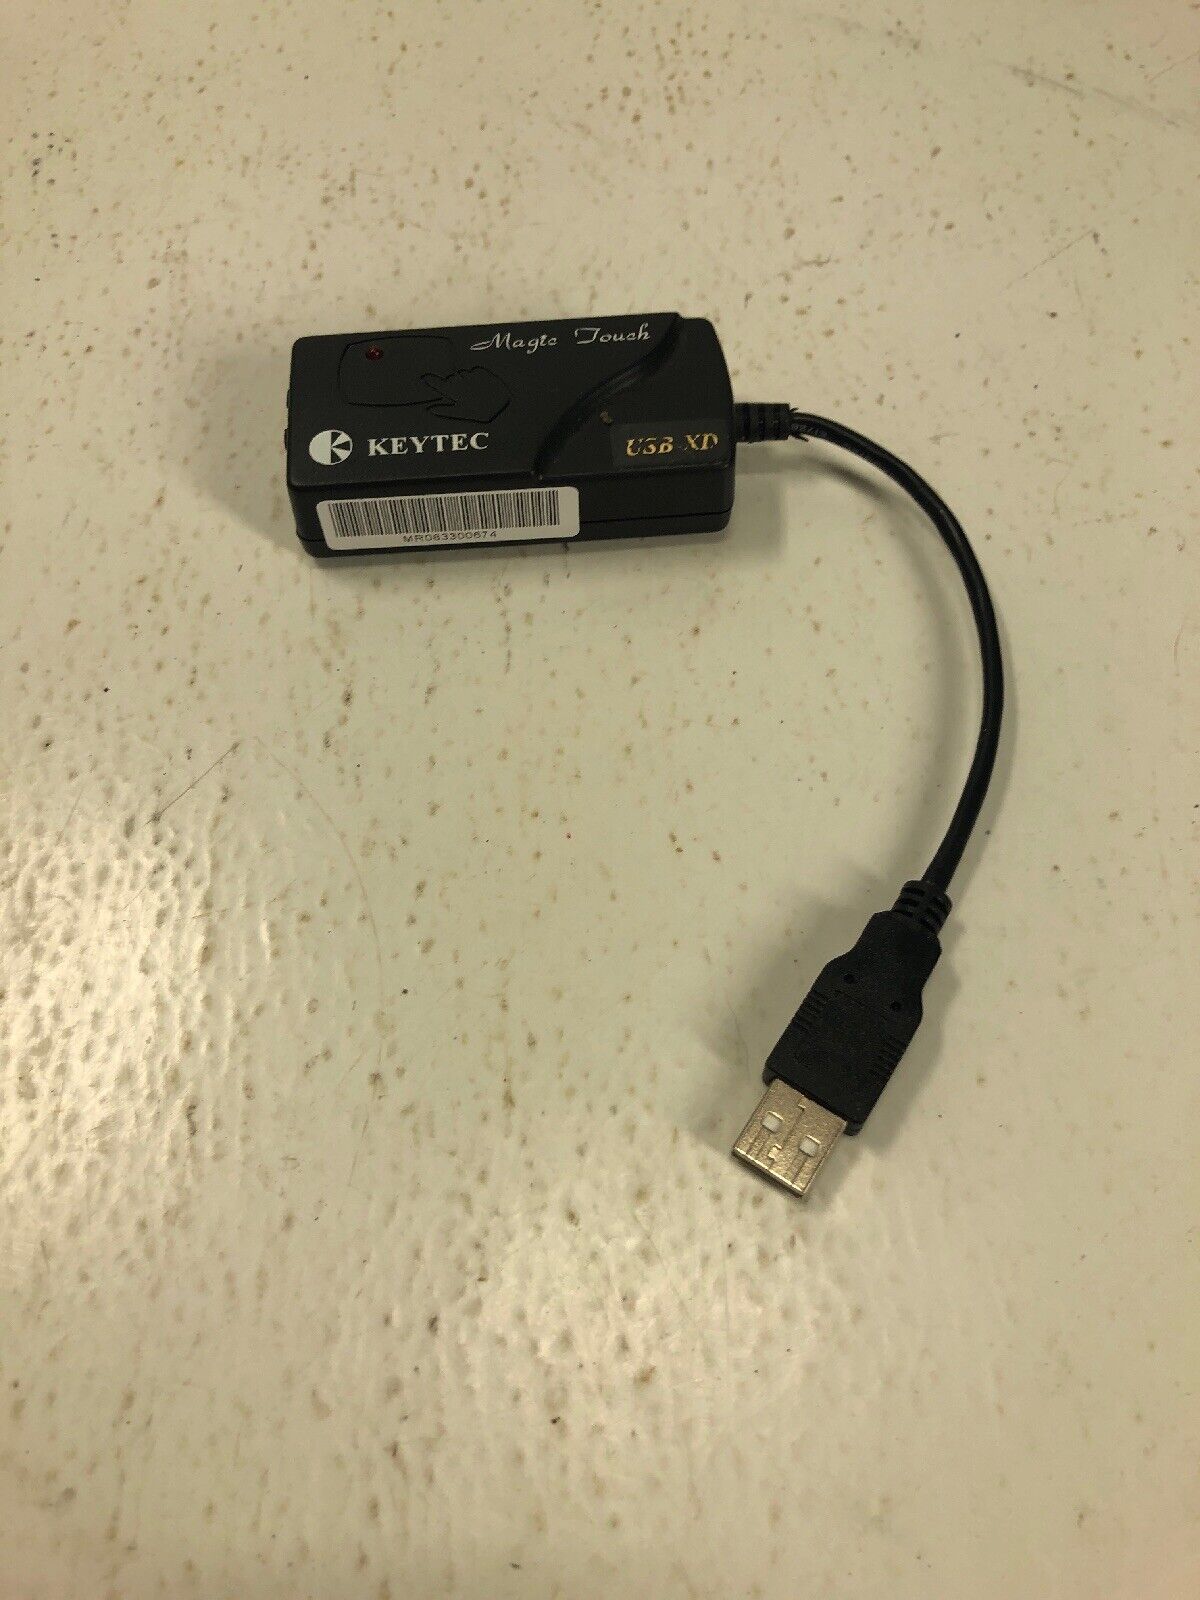 Keytec Magic Touch USB-XD Model: ET 2055D